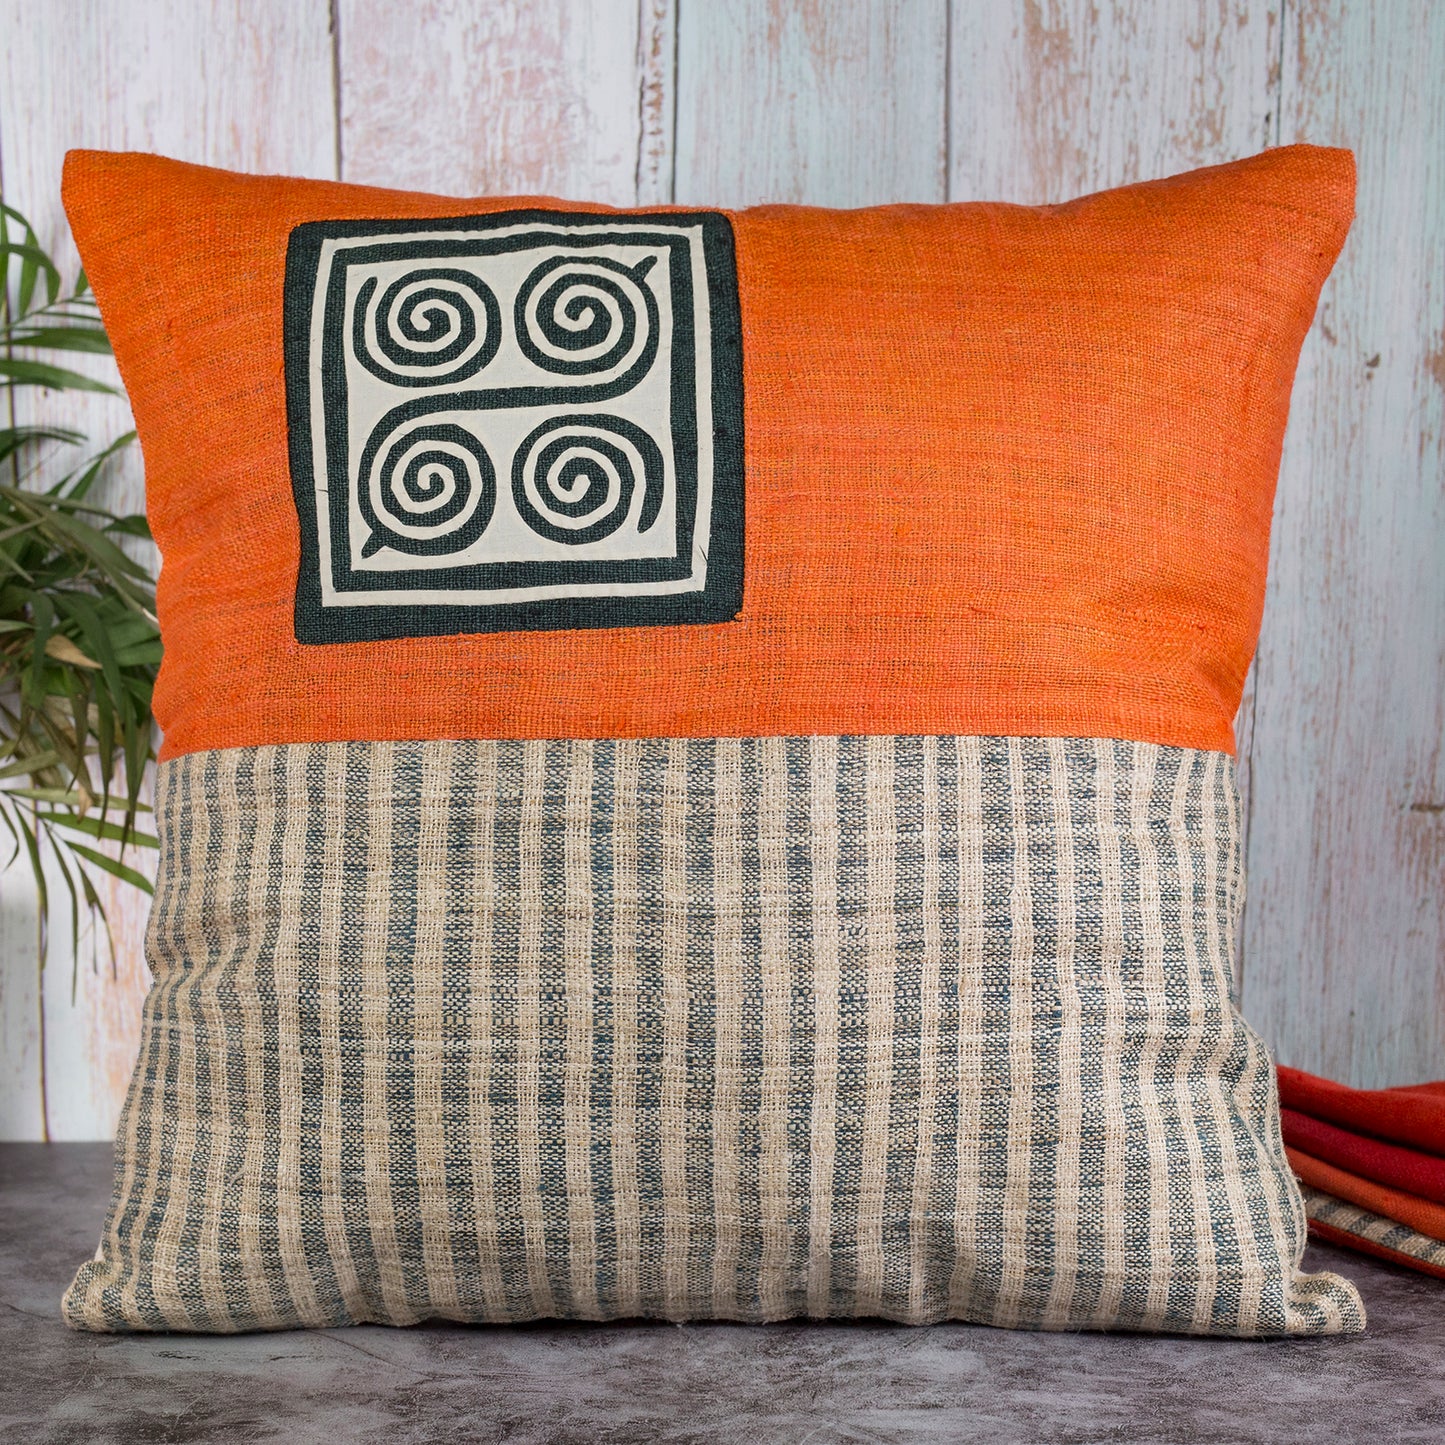 Hemp Cushion Cover in Orange - H'mong pattern, handwoven fabric stripes, handmade 100%